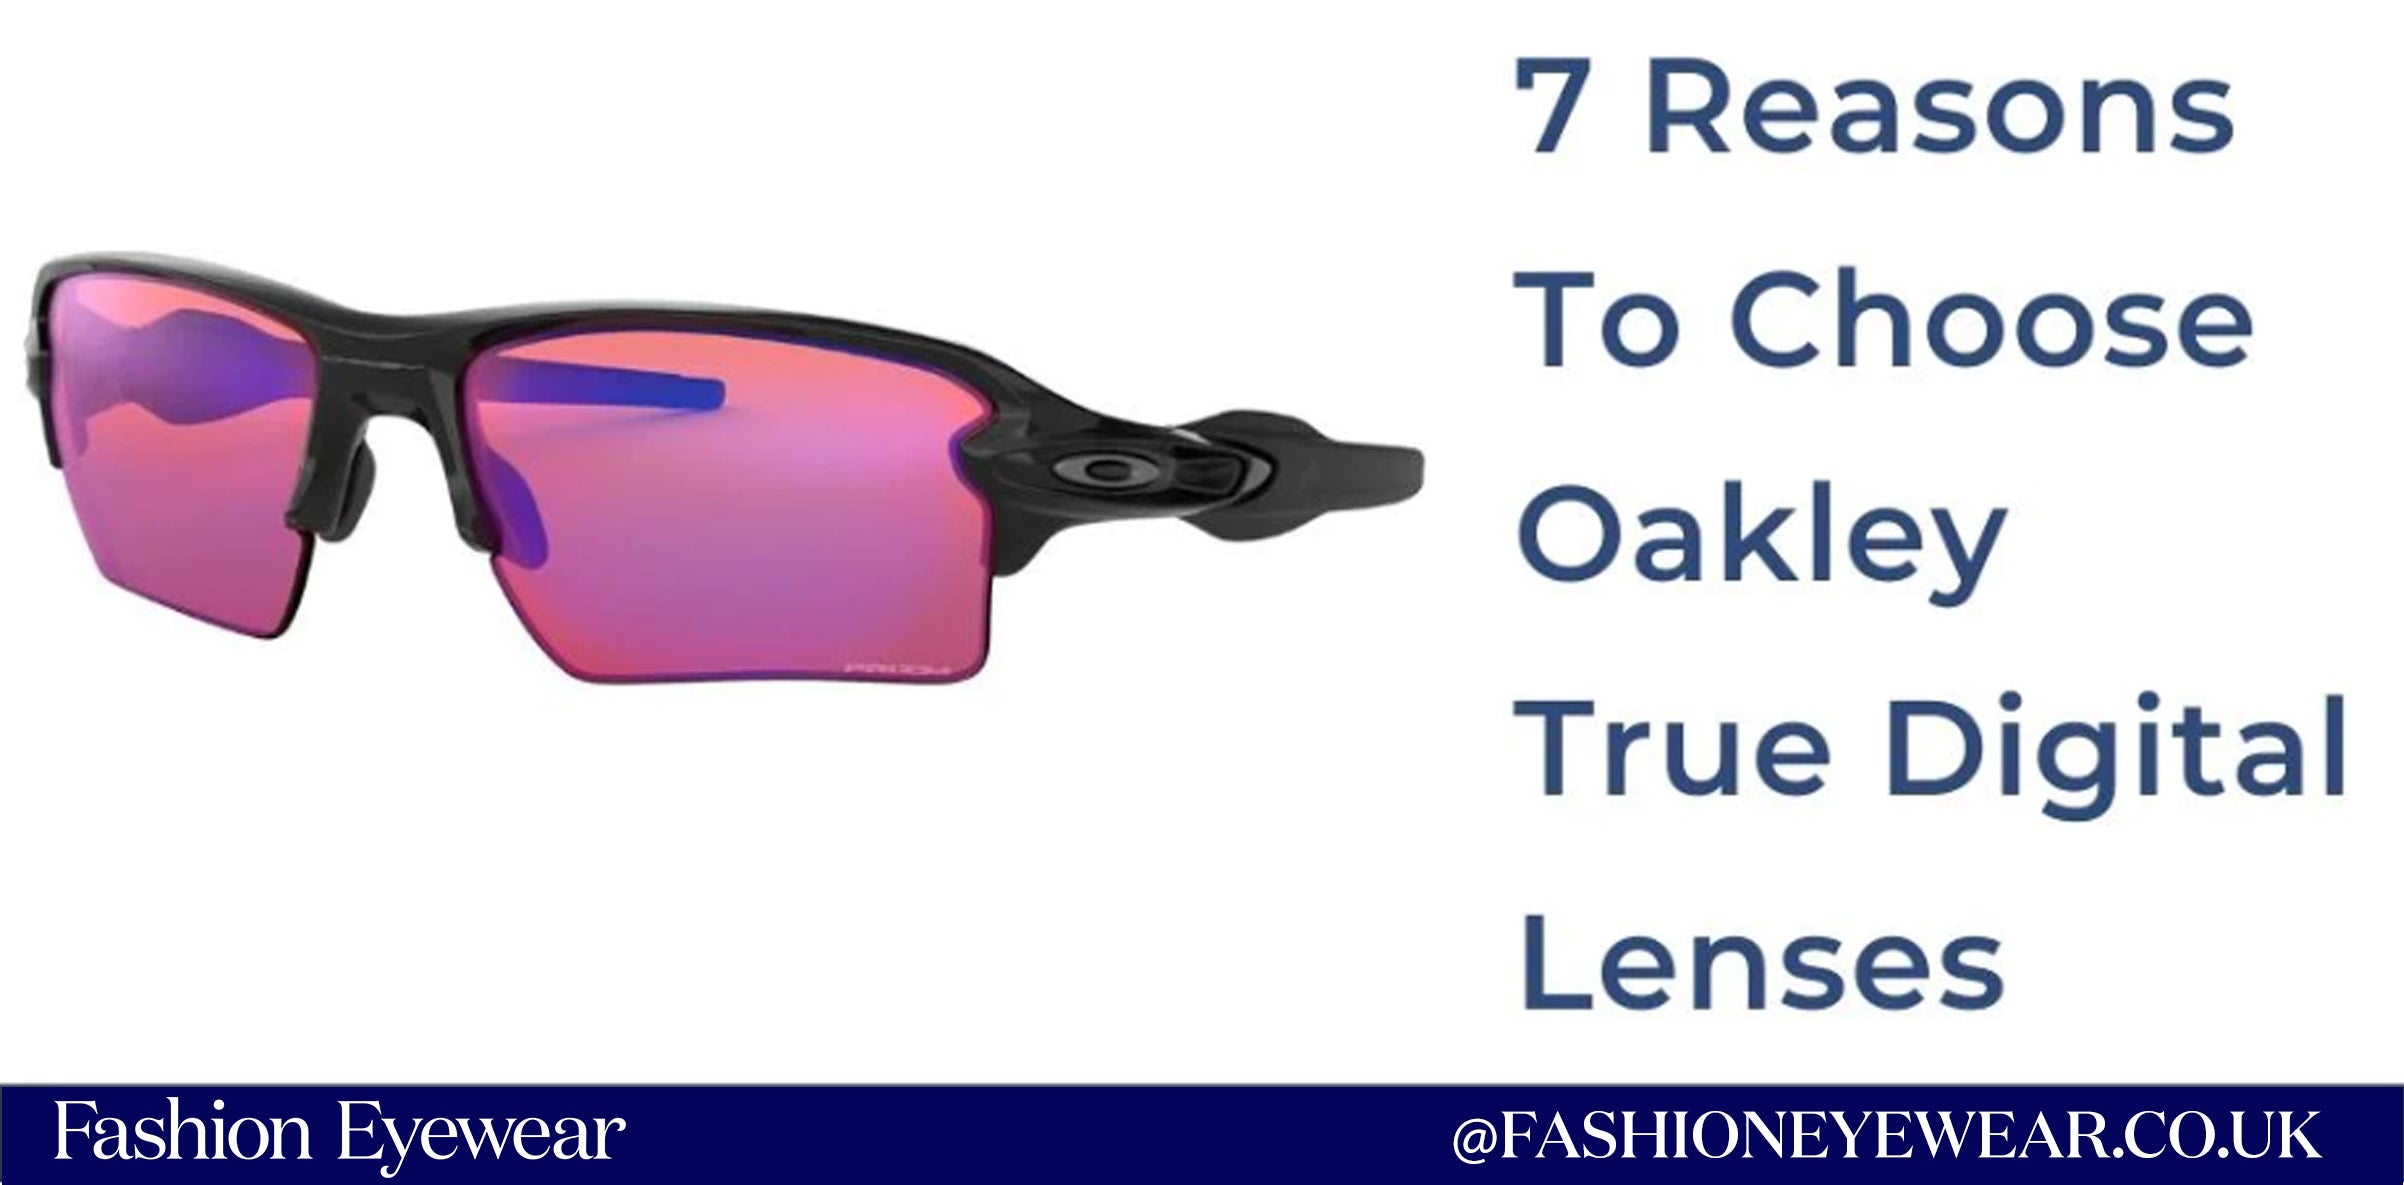 7 Reasons To Choose Oakley True Digital Lenses – Fashion Eyewear